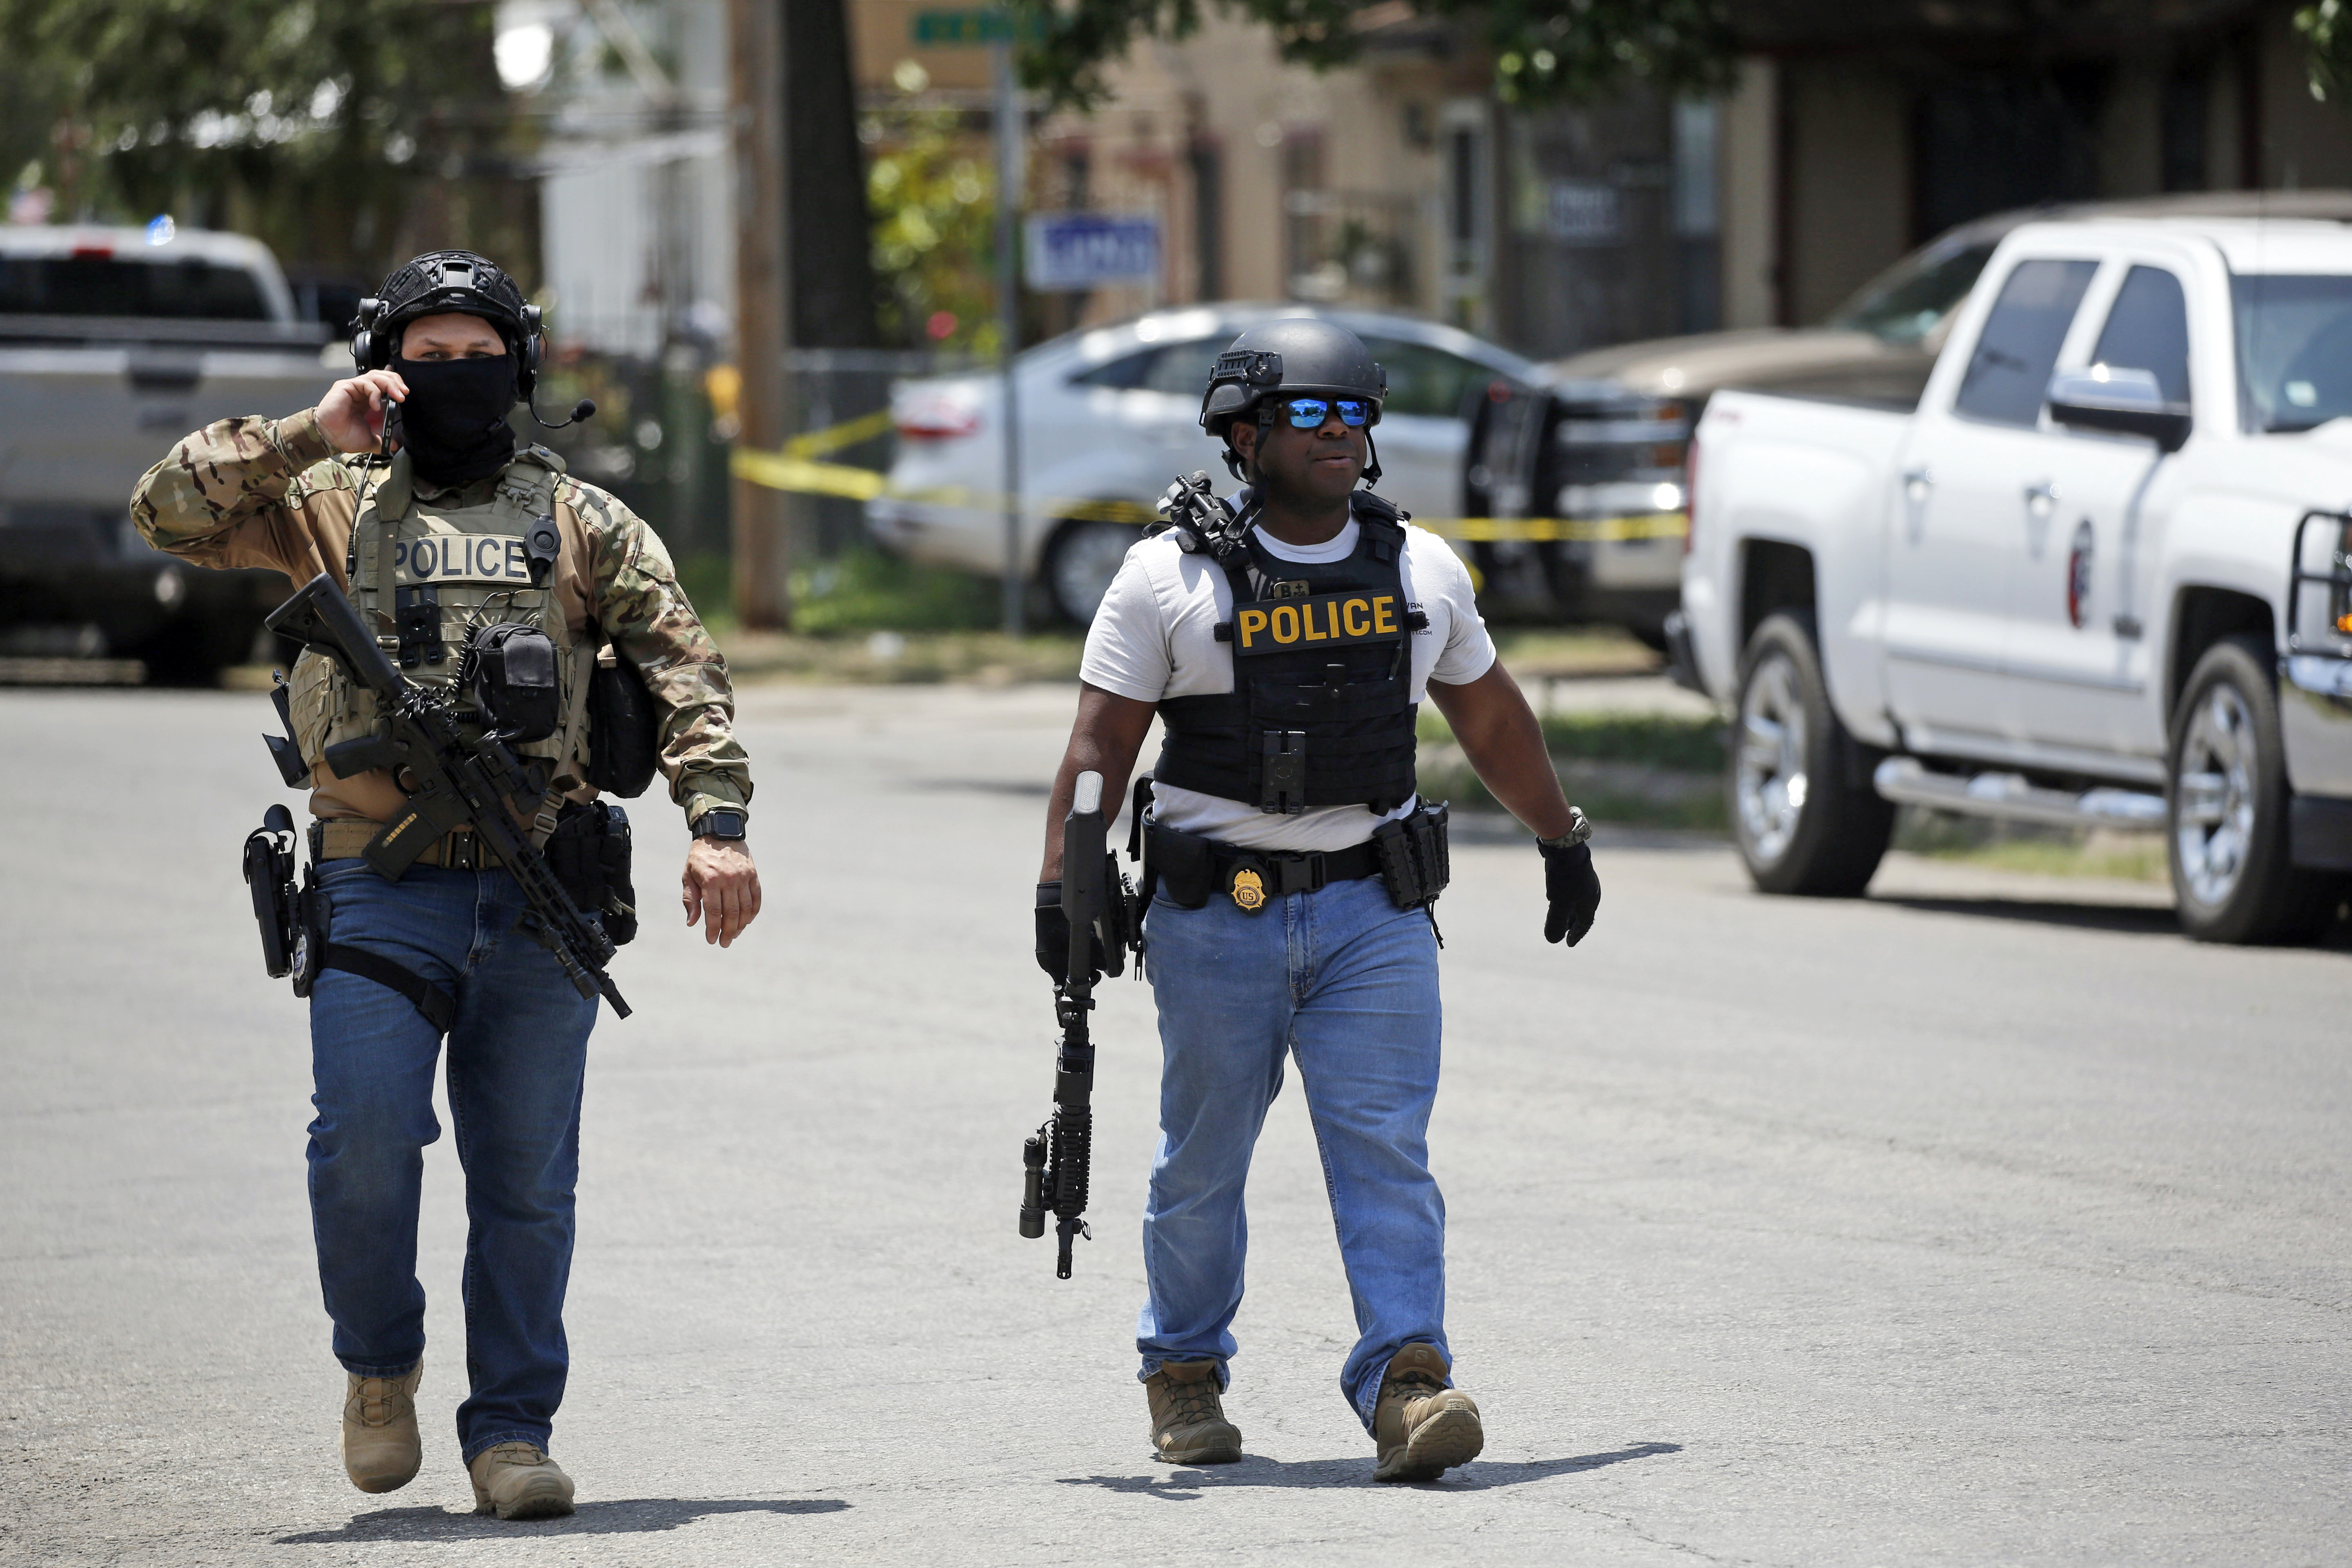 Police: 8 killed in Texas mall shooting, gunman also dead – KXAN